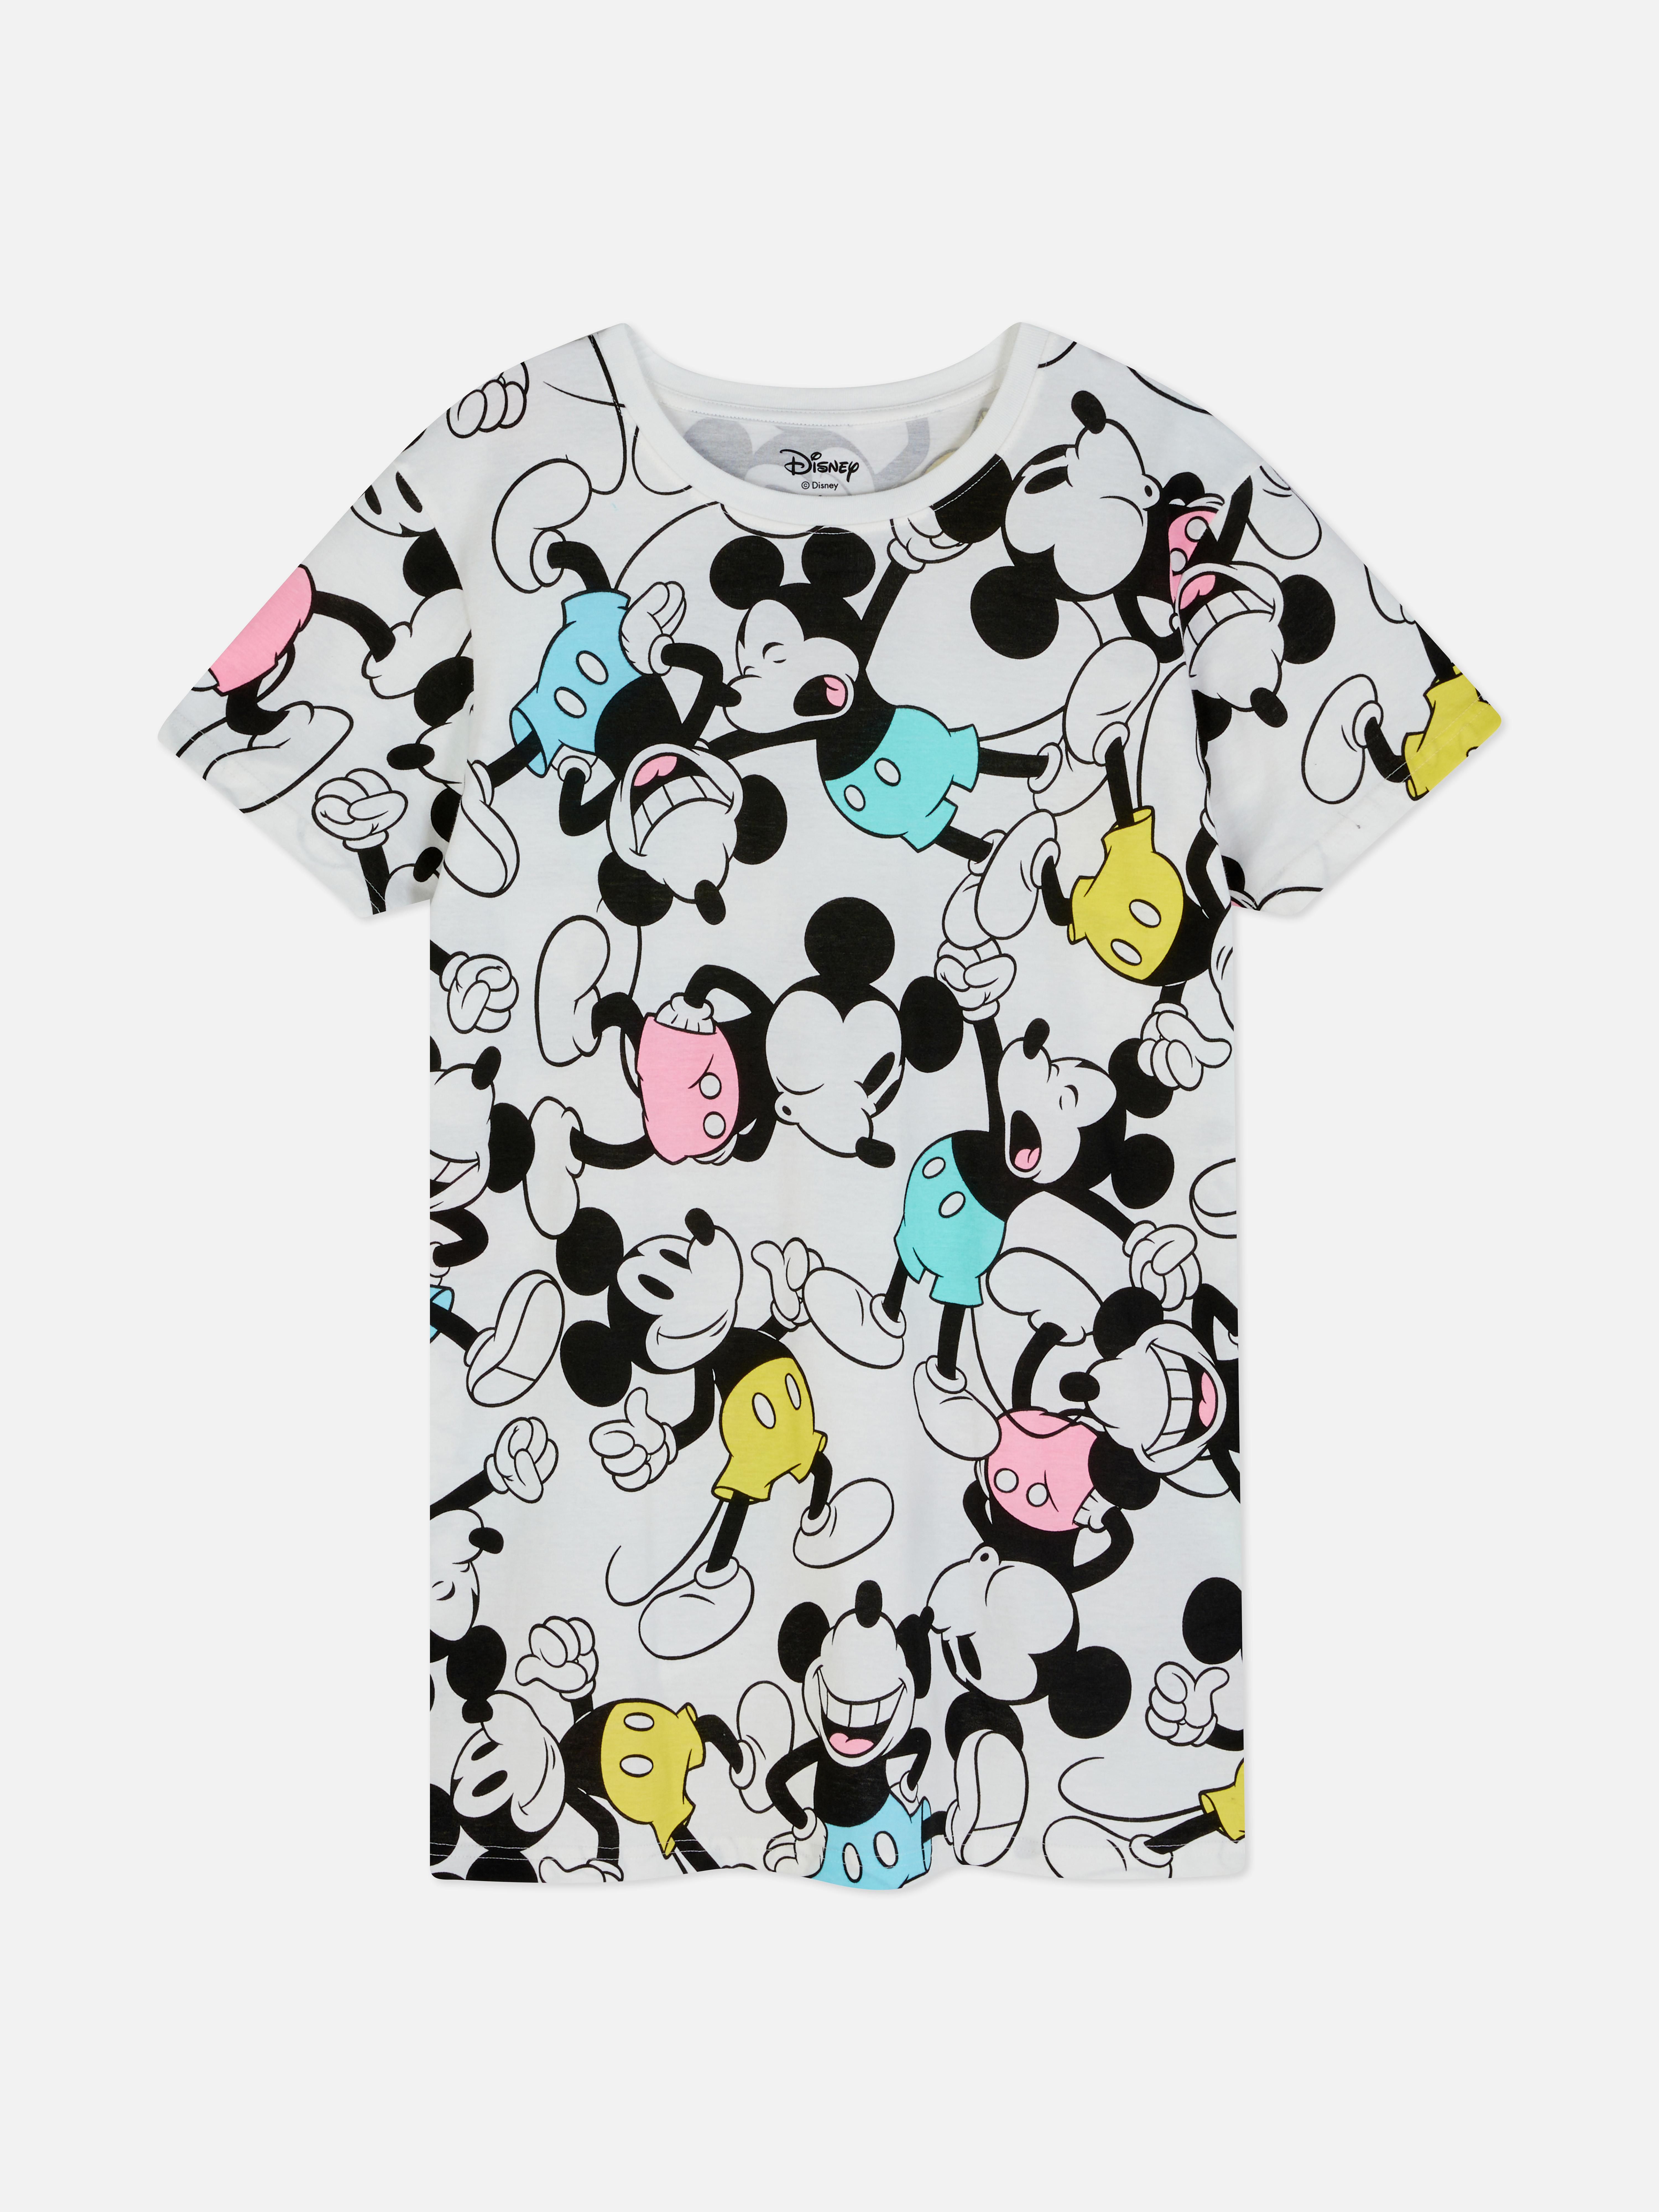 Camiseta de pijama con personaje de Disney